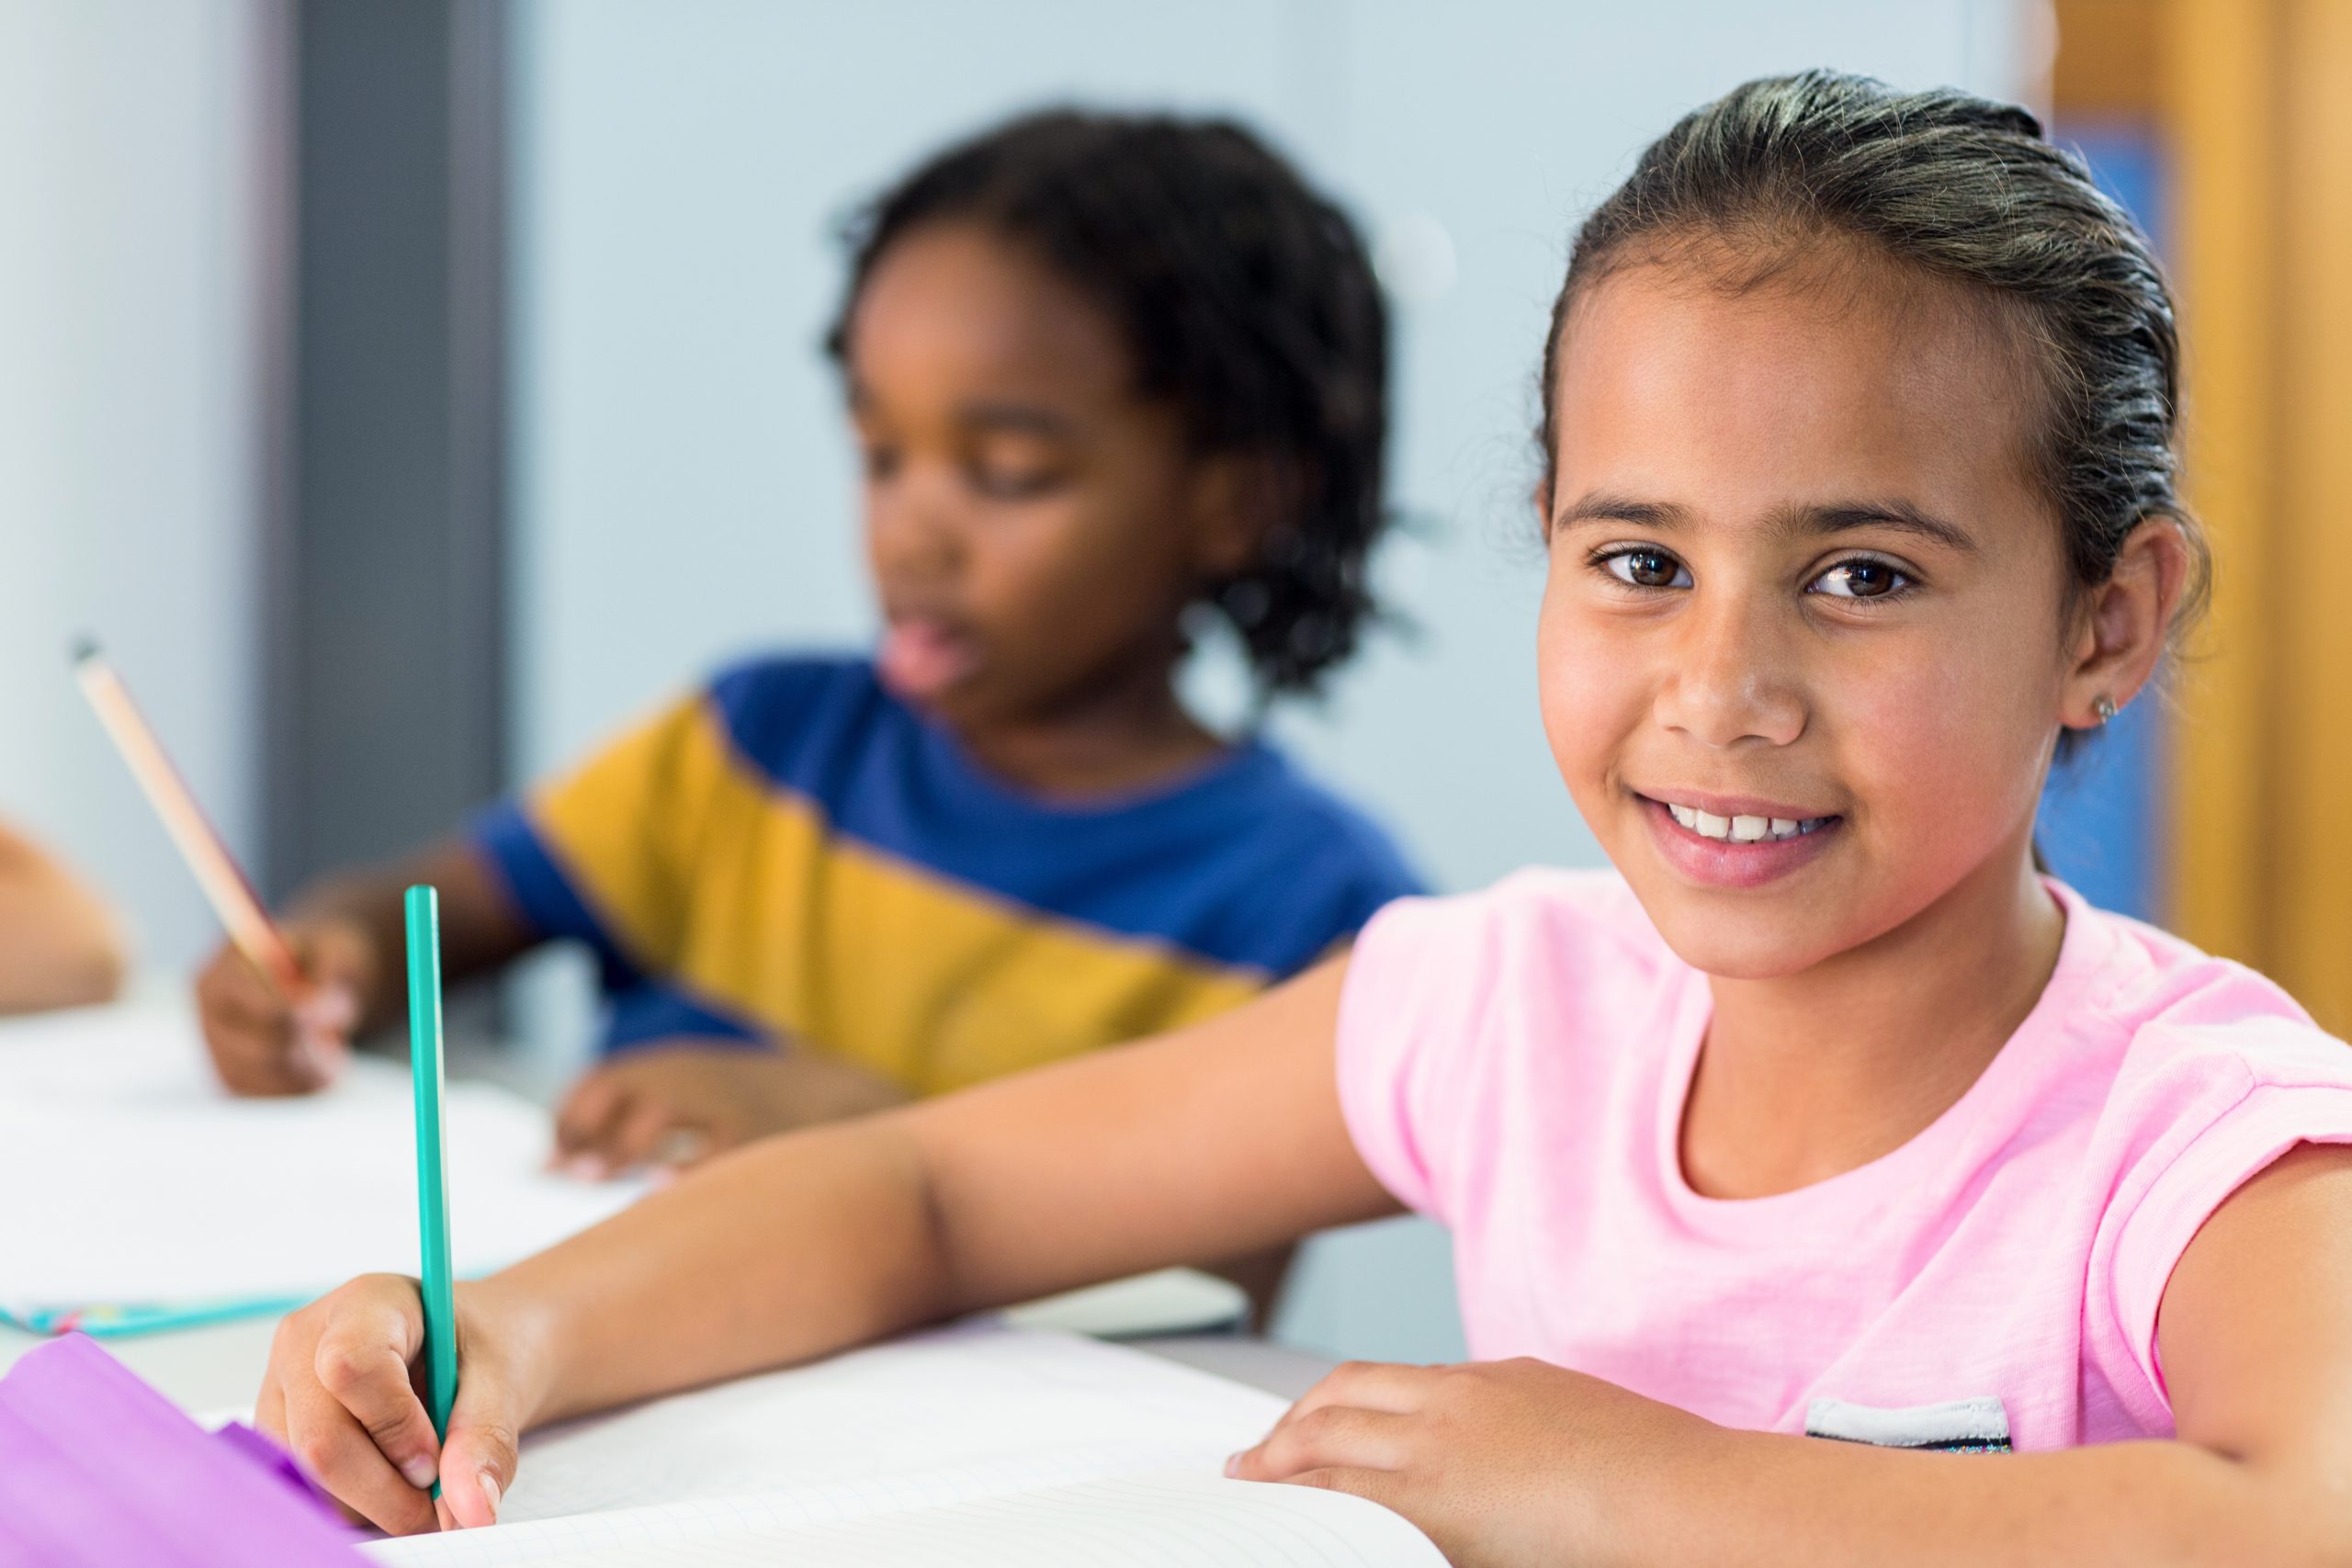 En smilende jente sitter og skriver i klasserommet